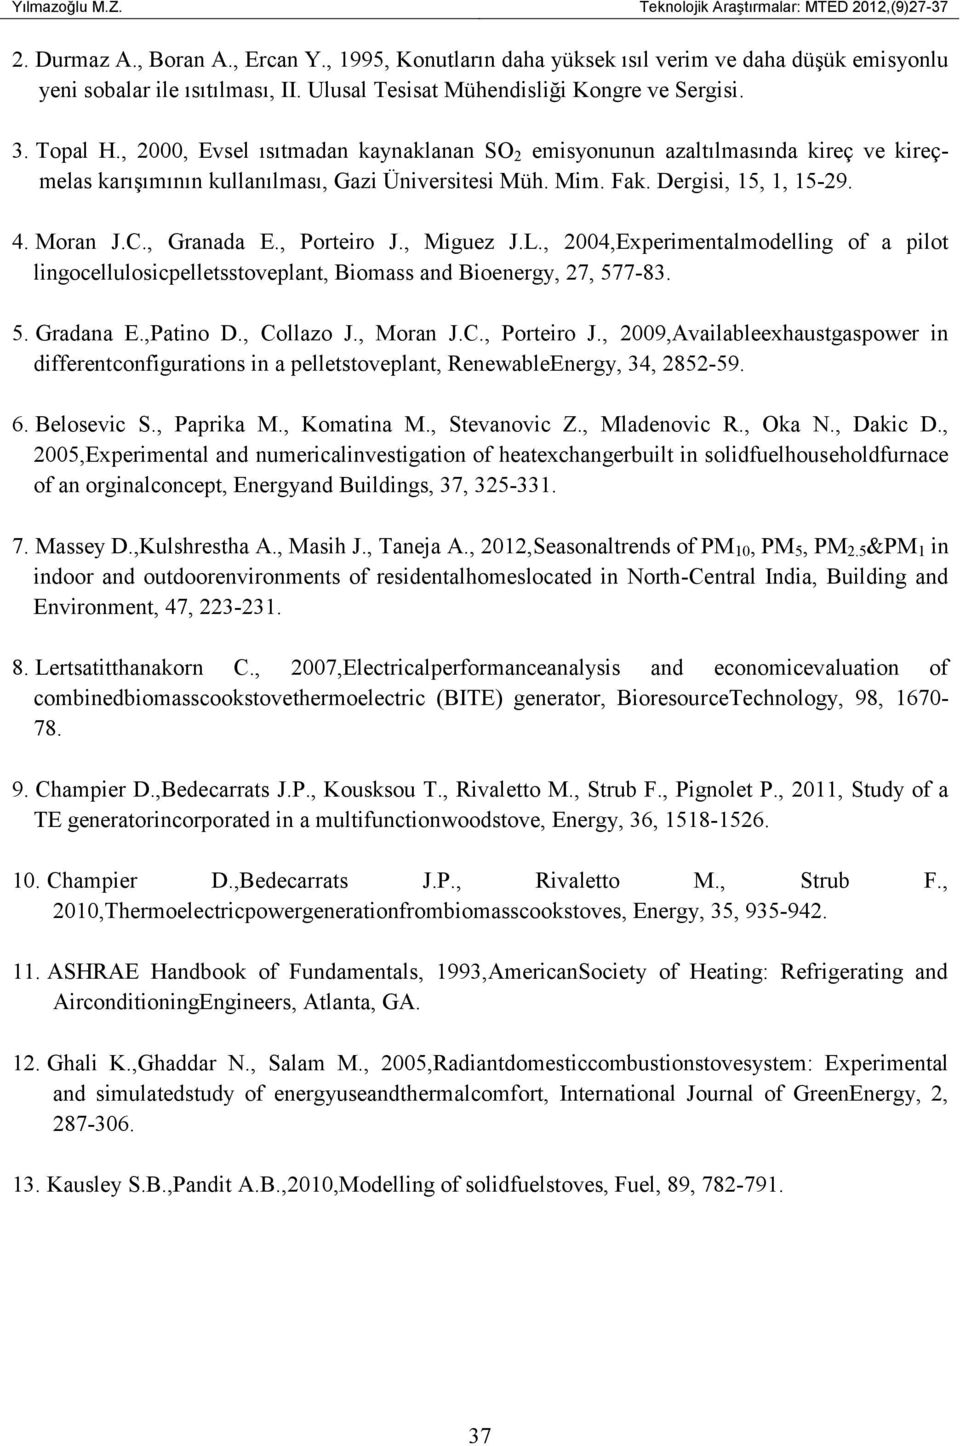 Fak. Dergisi, 15, 1, 15-29. 4. Moran J.C., Granada E., Porteiro J., Miguez J.L., 24,Experimentalmodelling of a pilot lingocellulosicpelletsstoveplant, Biomass and Bioenergy, 27, 577-83. 5. Gradana E.